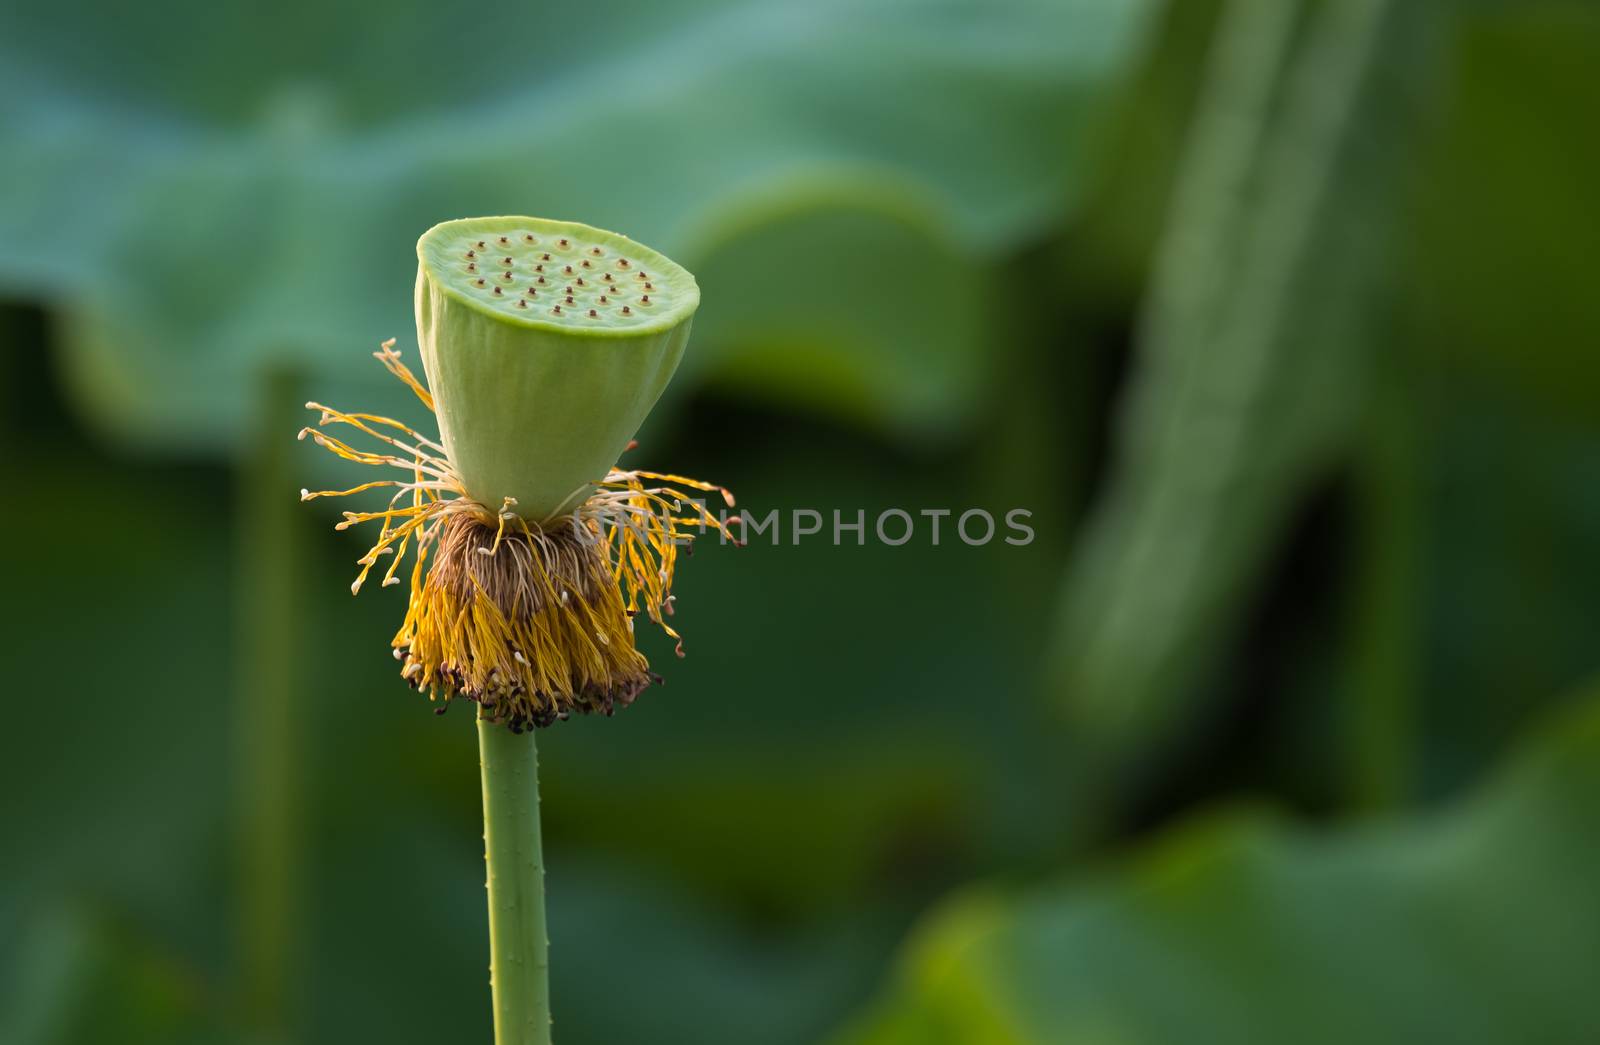 Lotus seeds of lotus flower